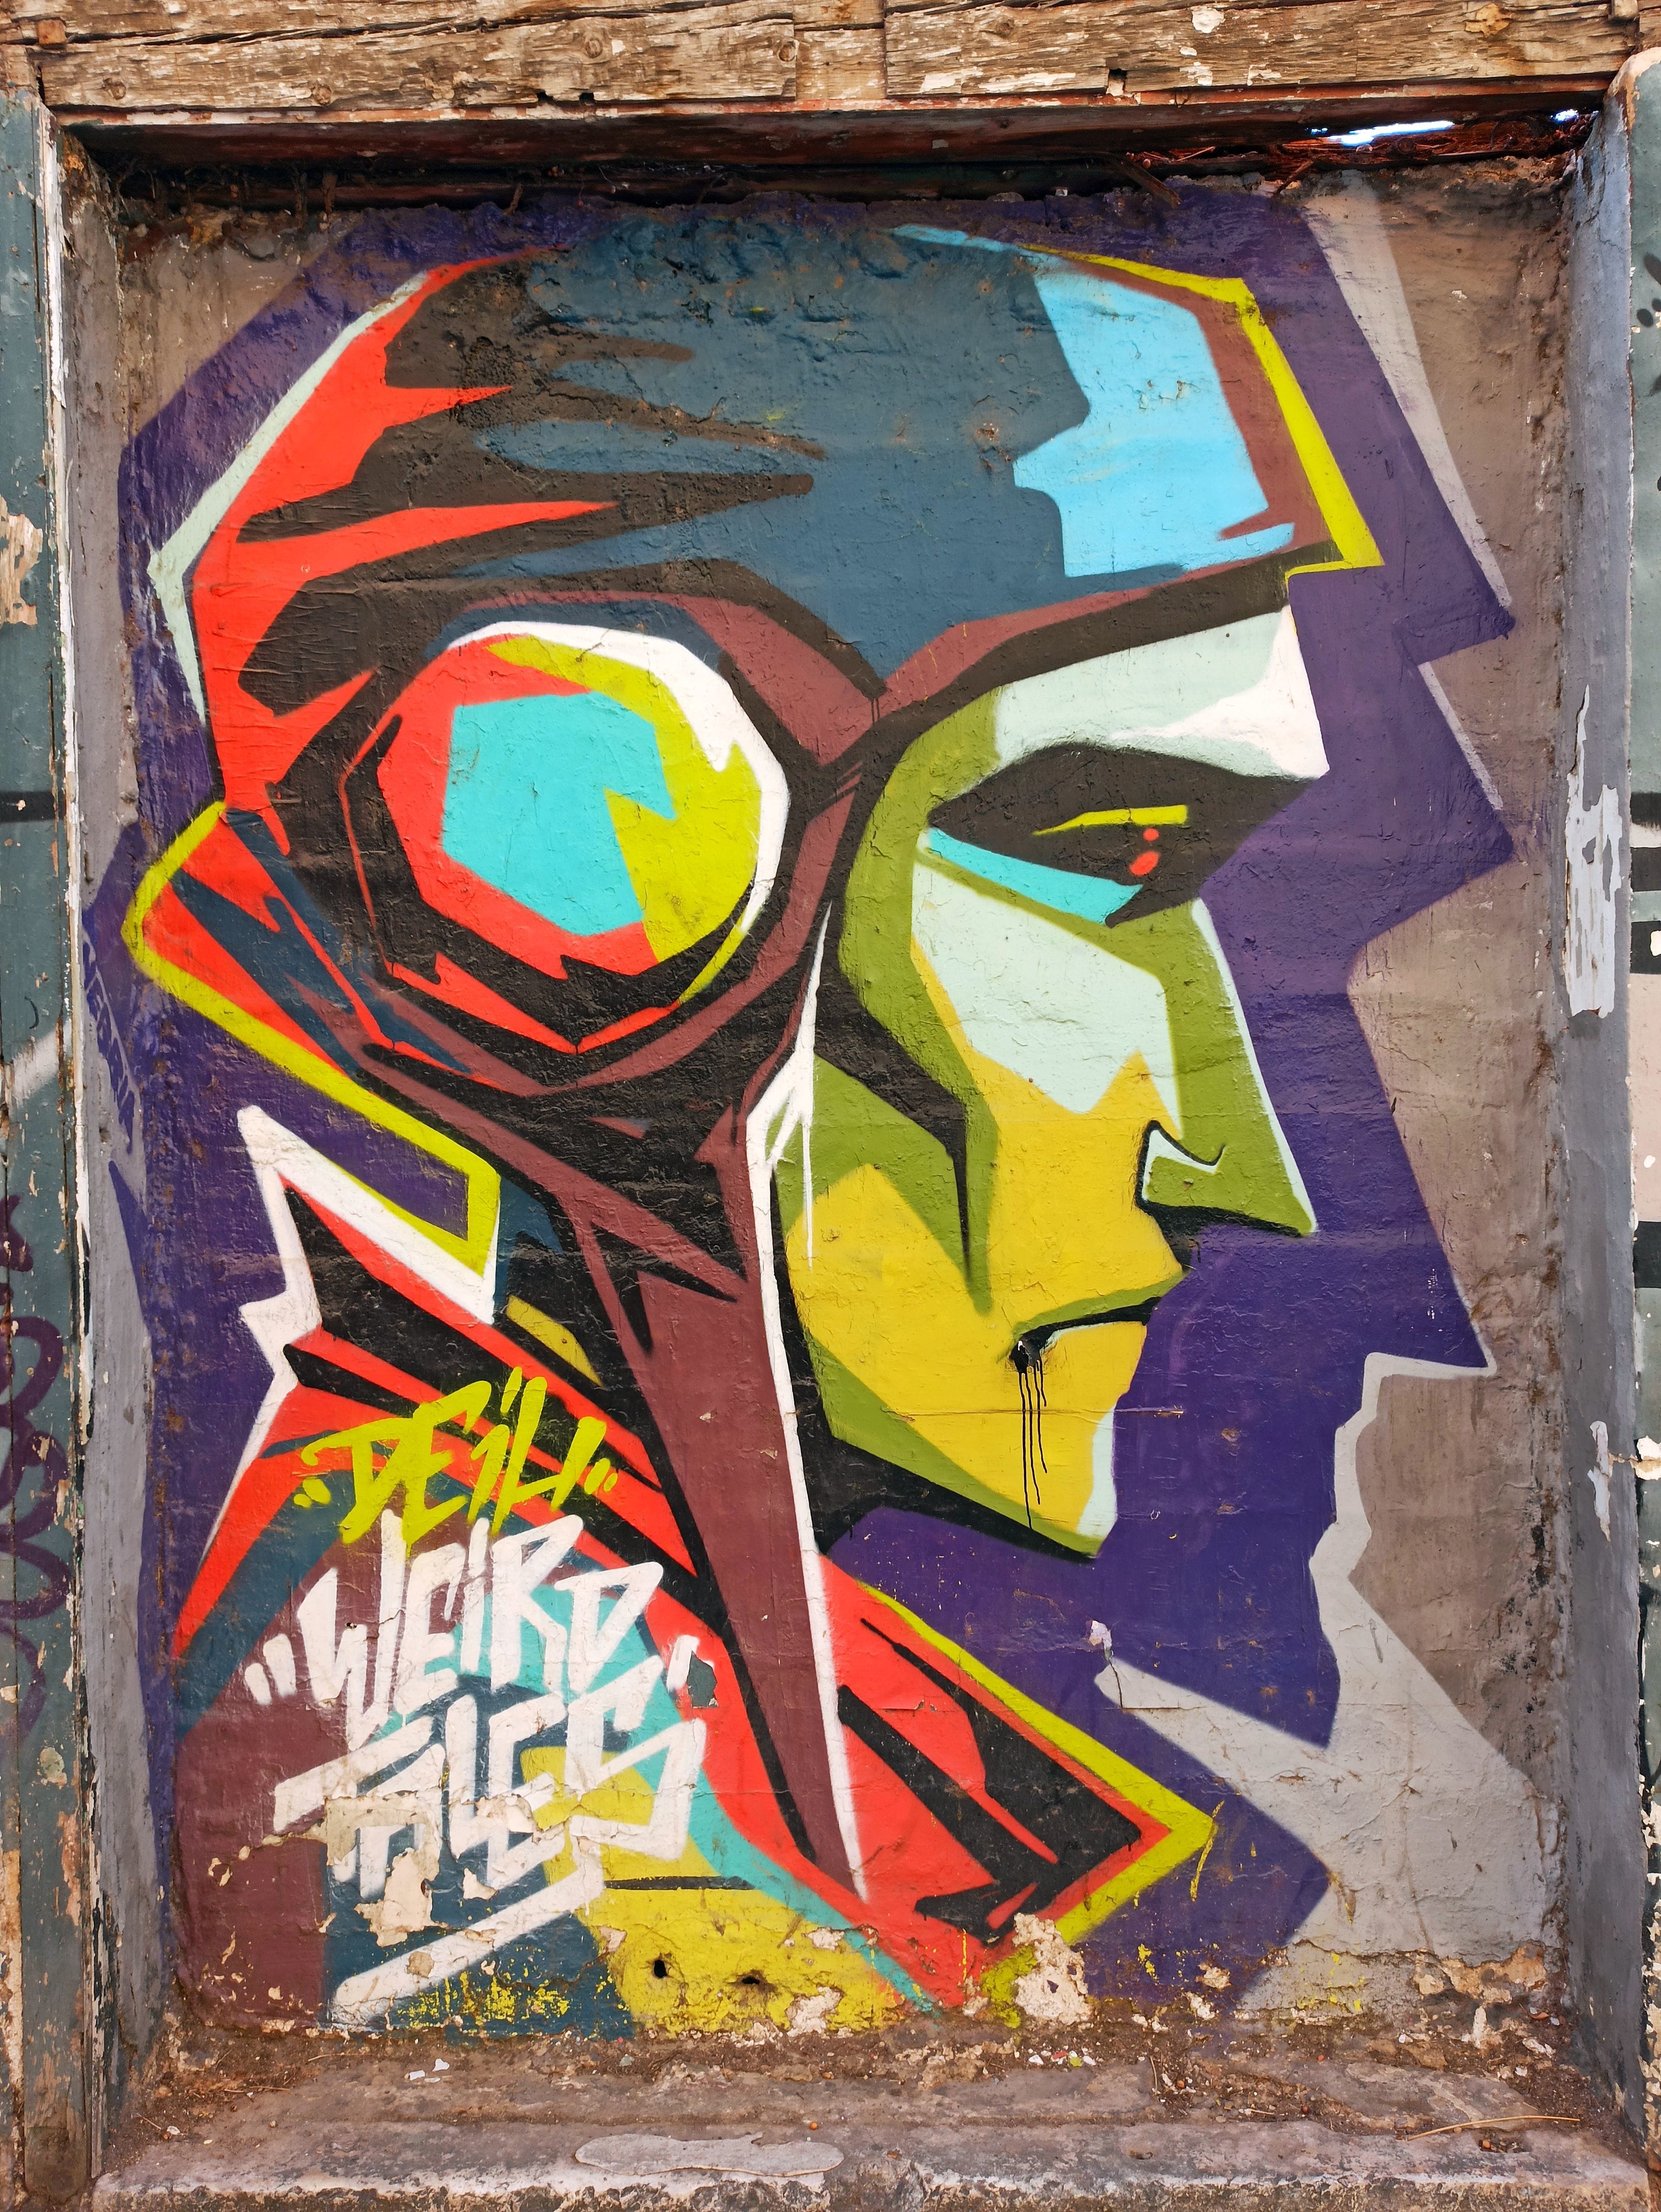 Graffiti 4765  by the artist Deih xlf captured by elettrotajik in València Spain